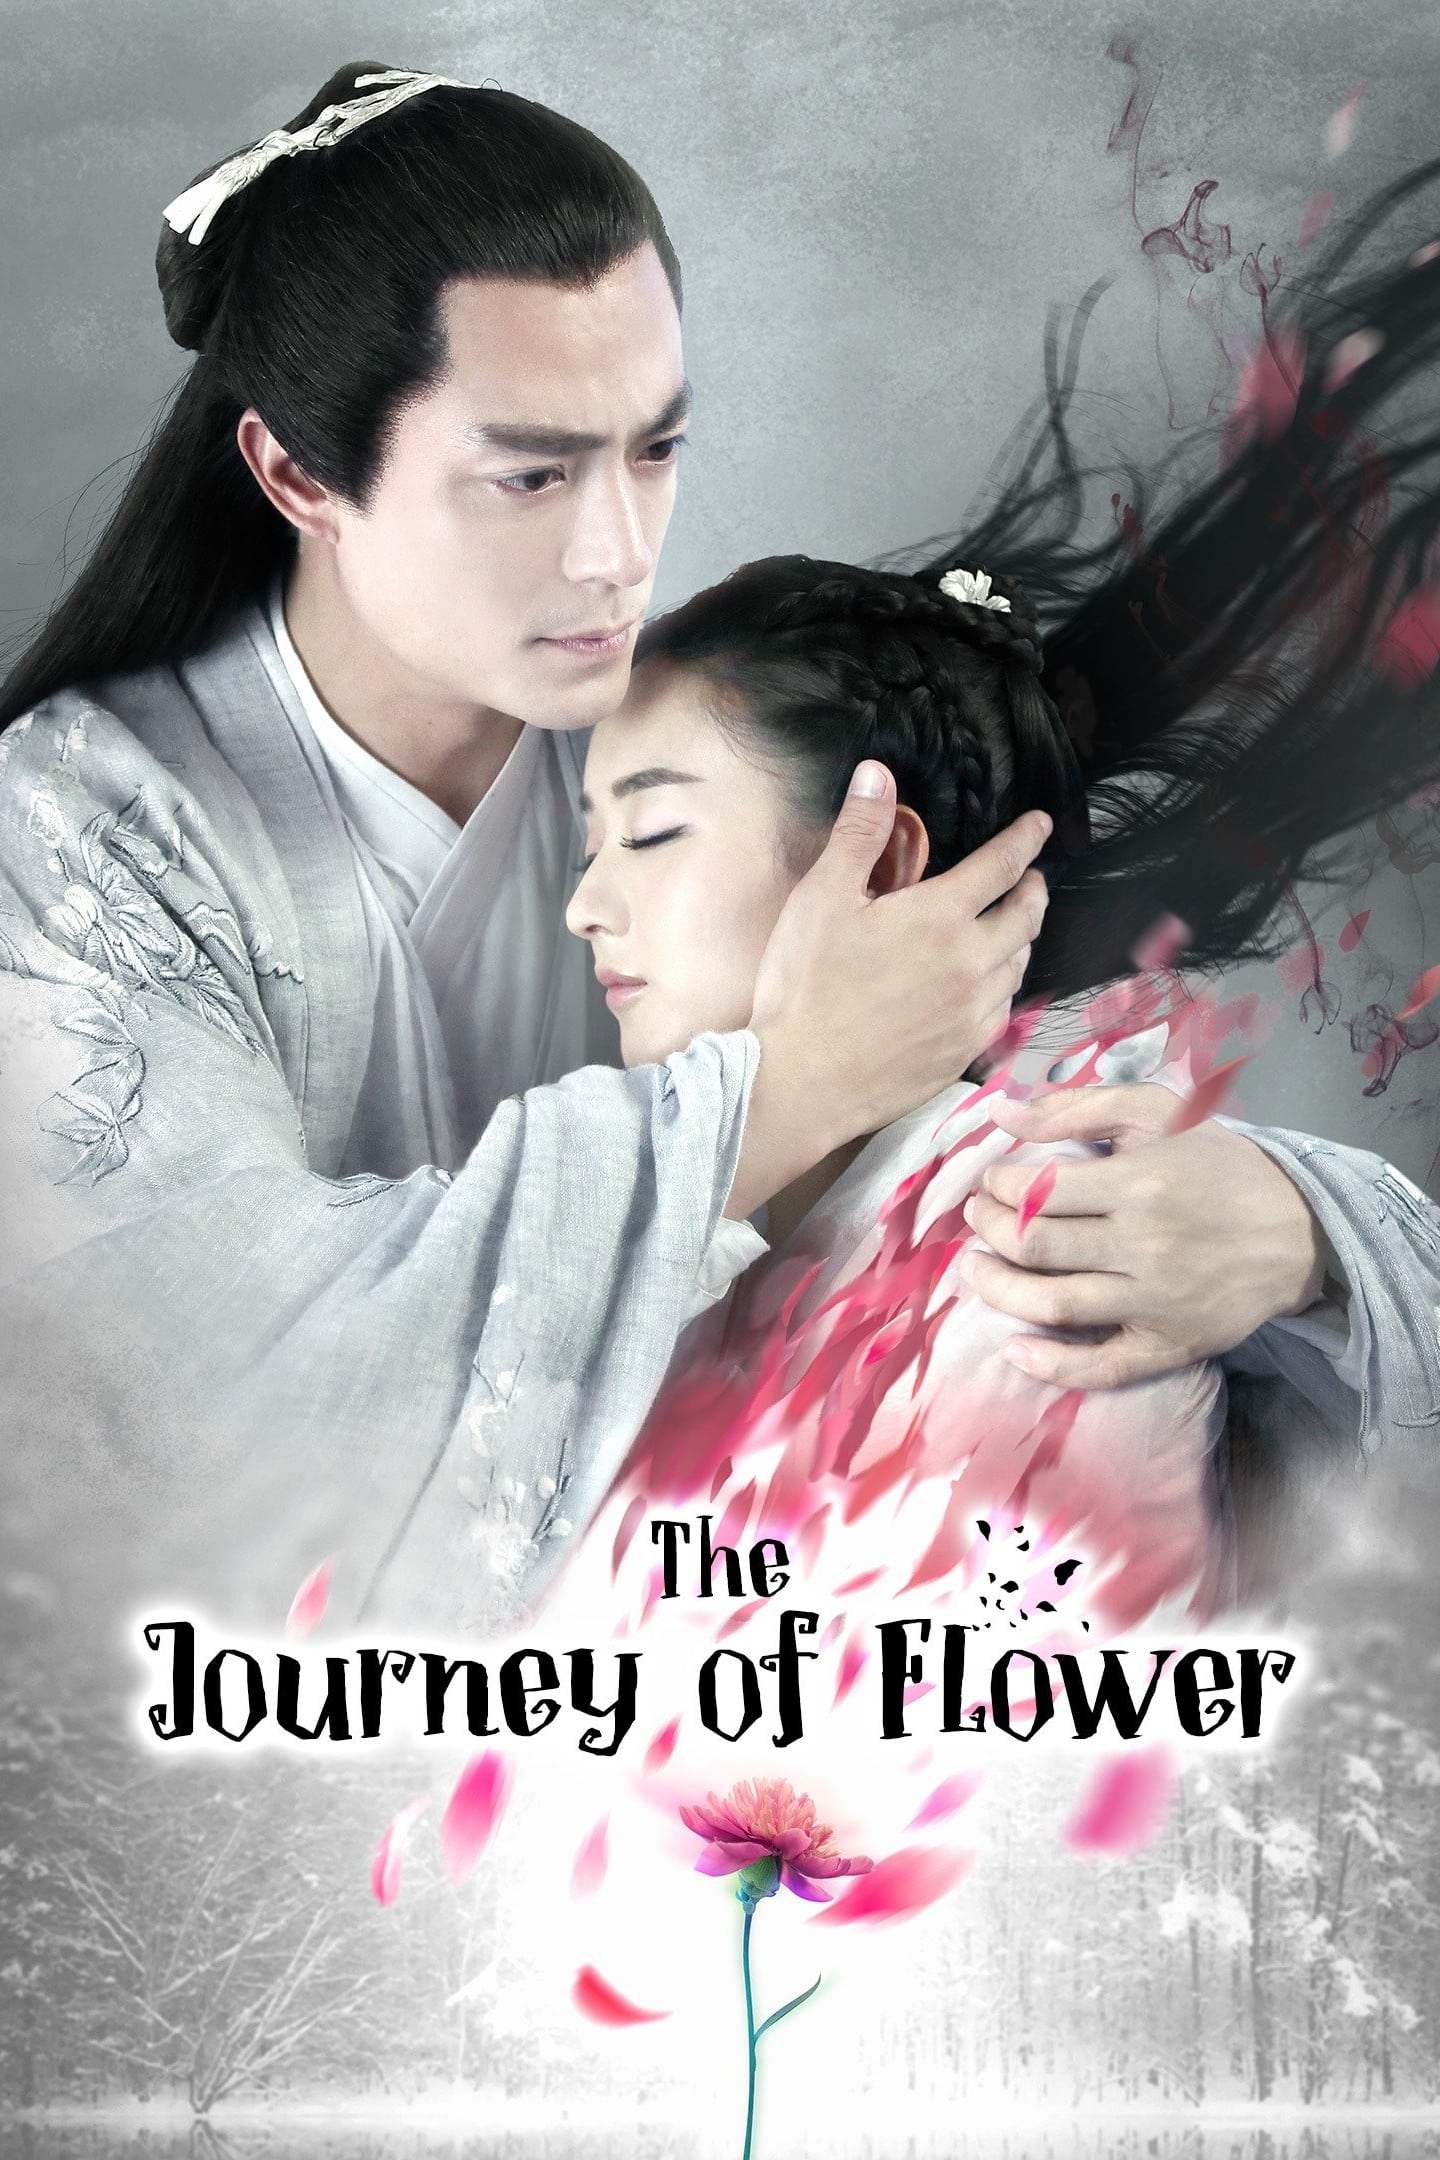 the journey of flower songs